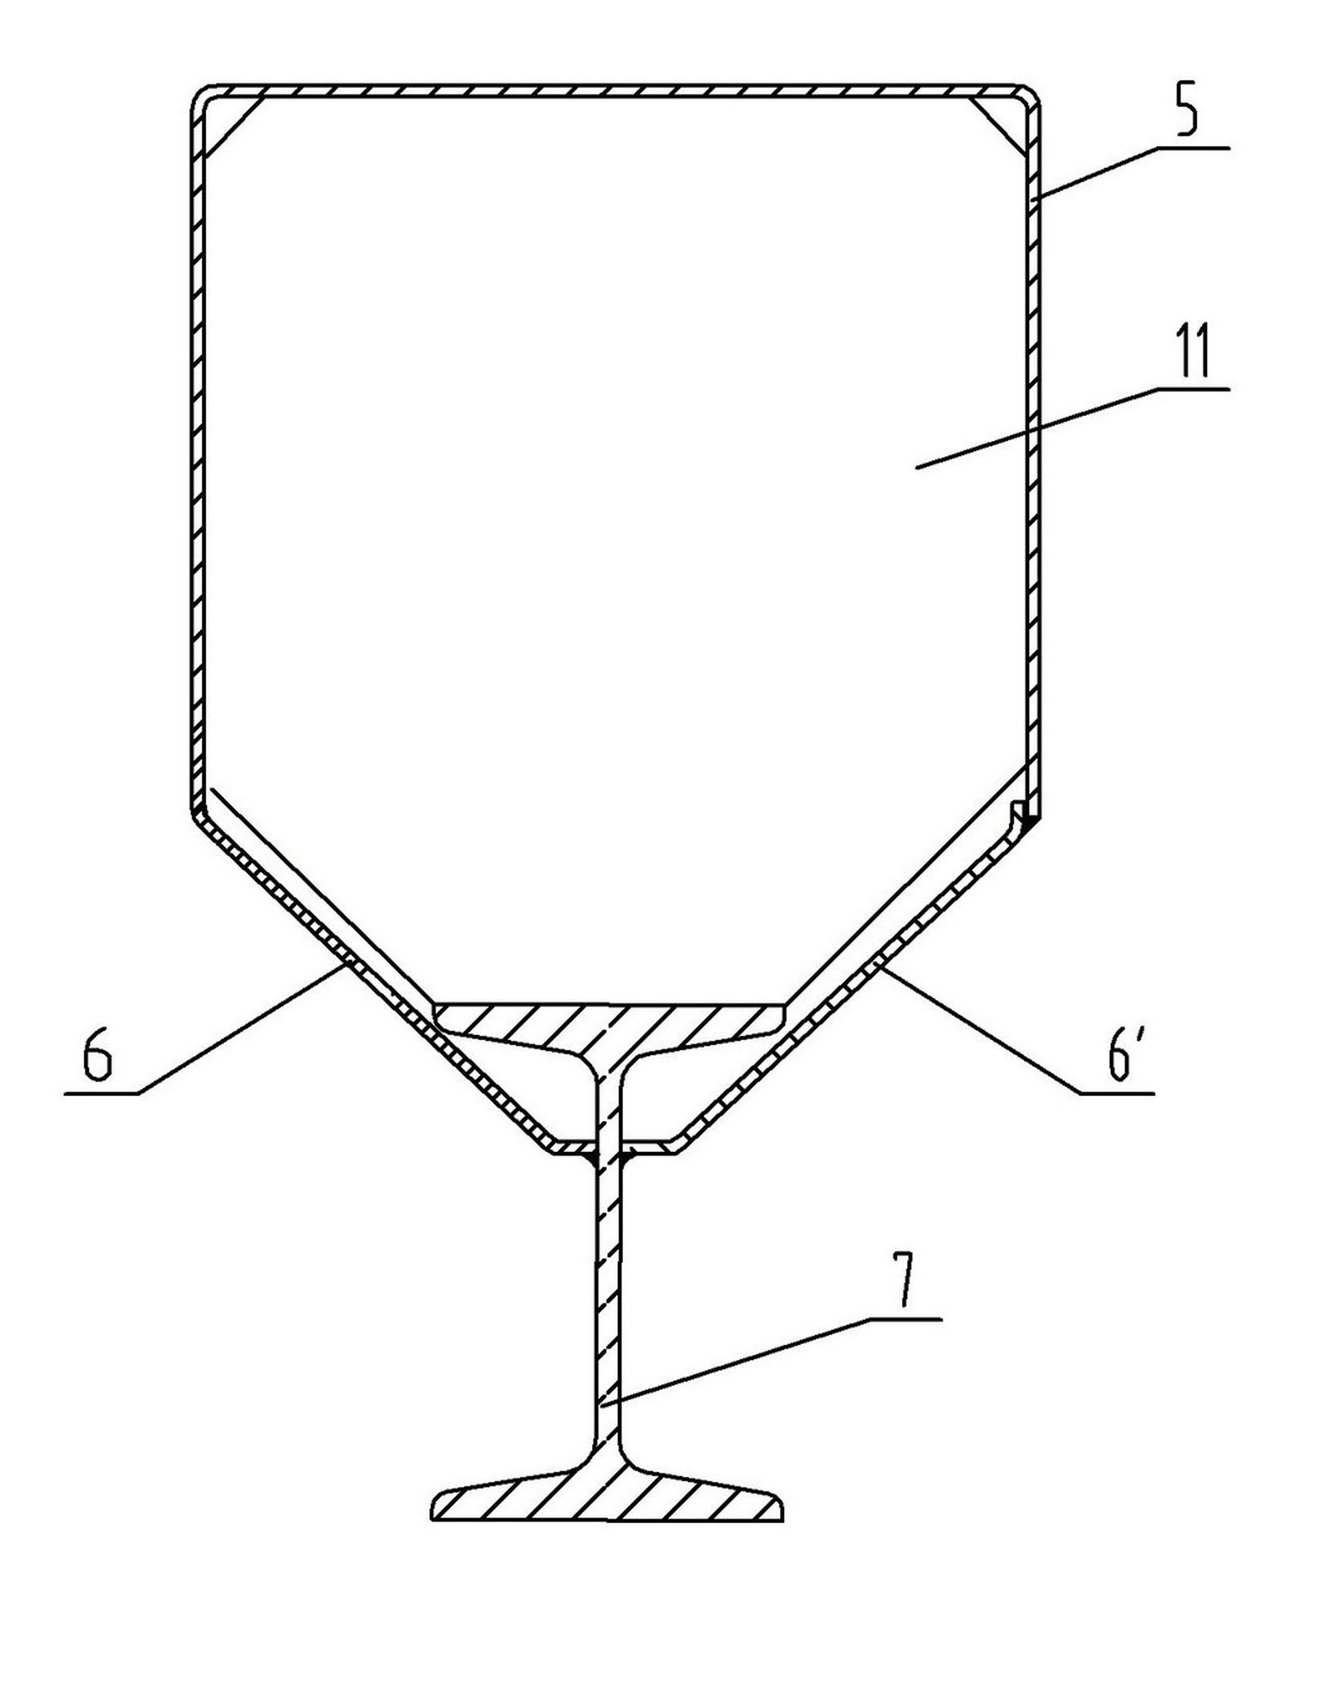 Main girder of single-girder crane